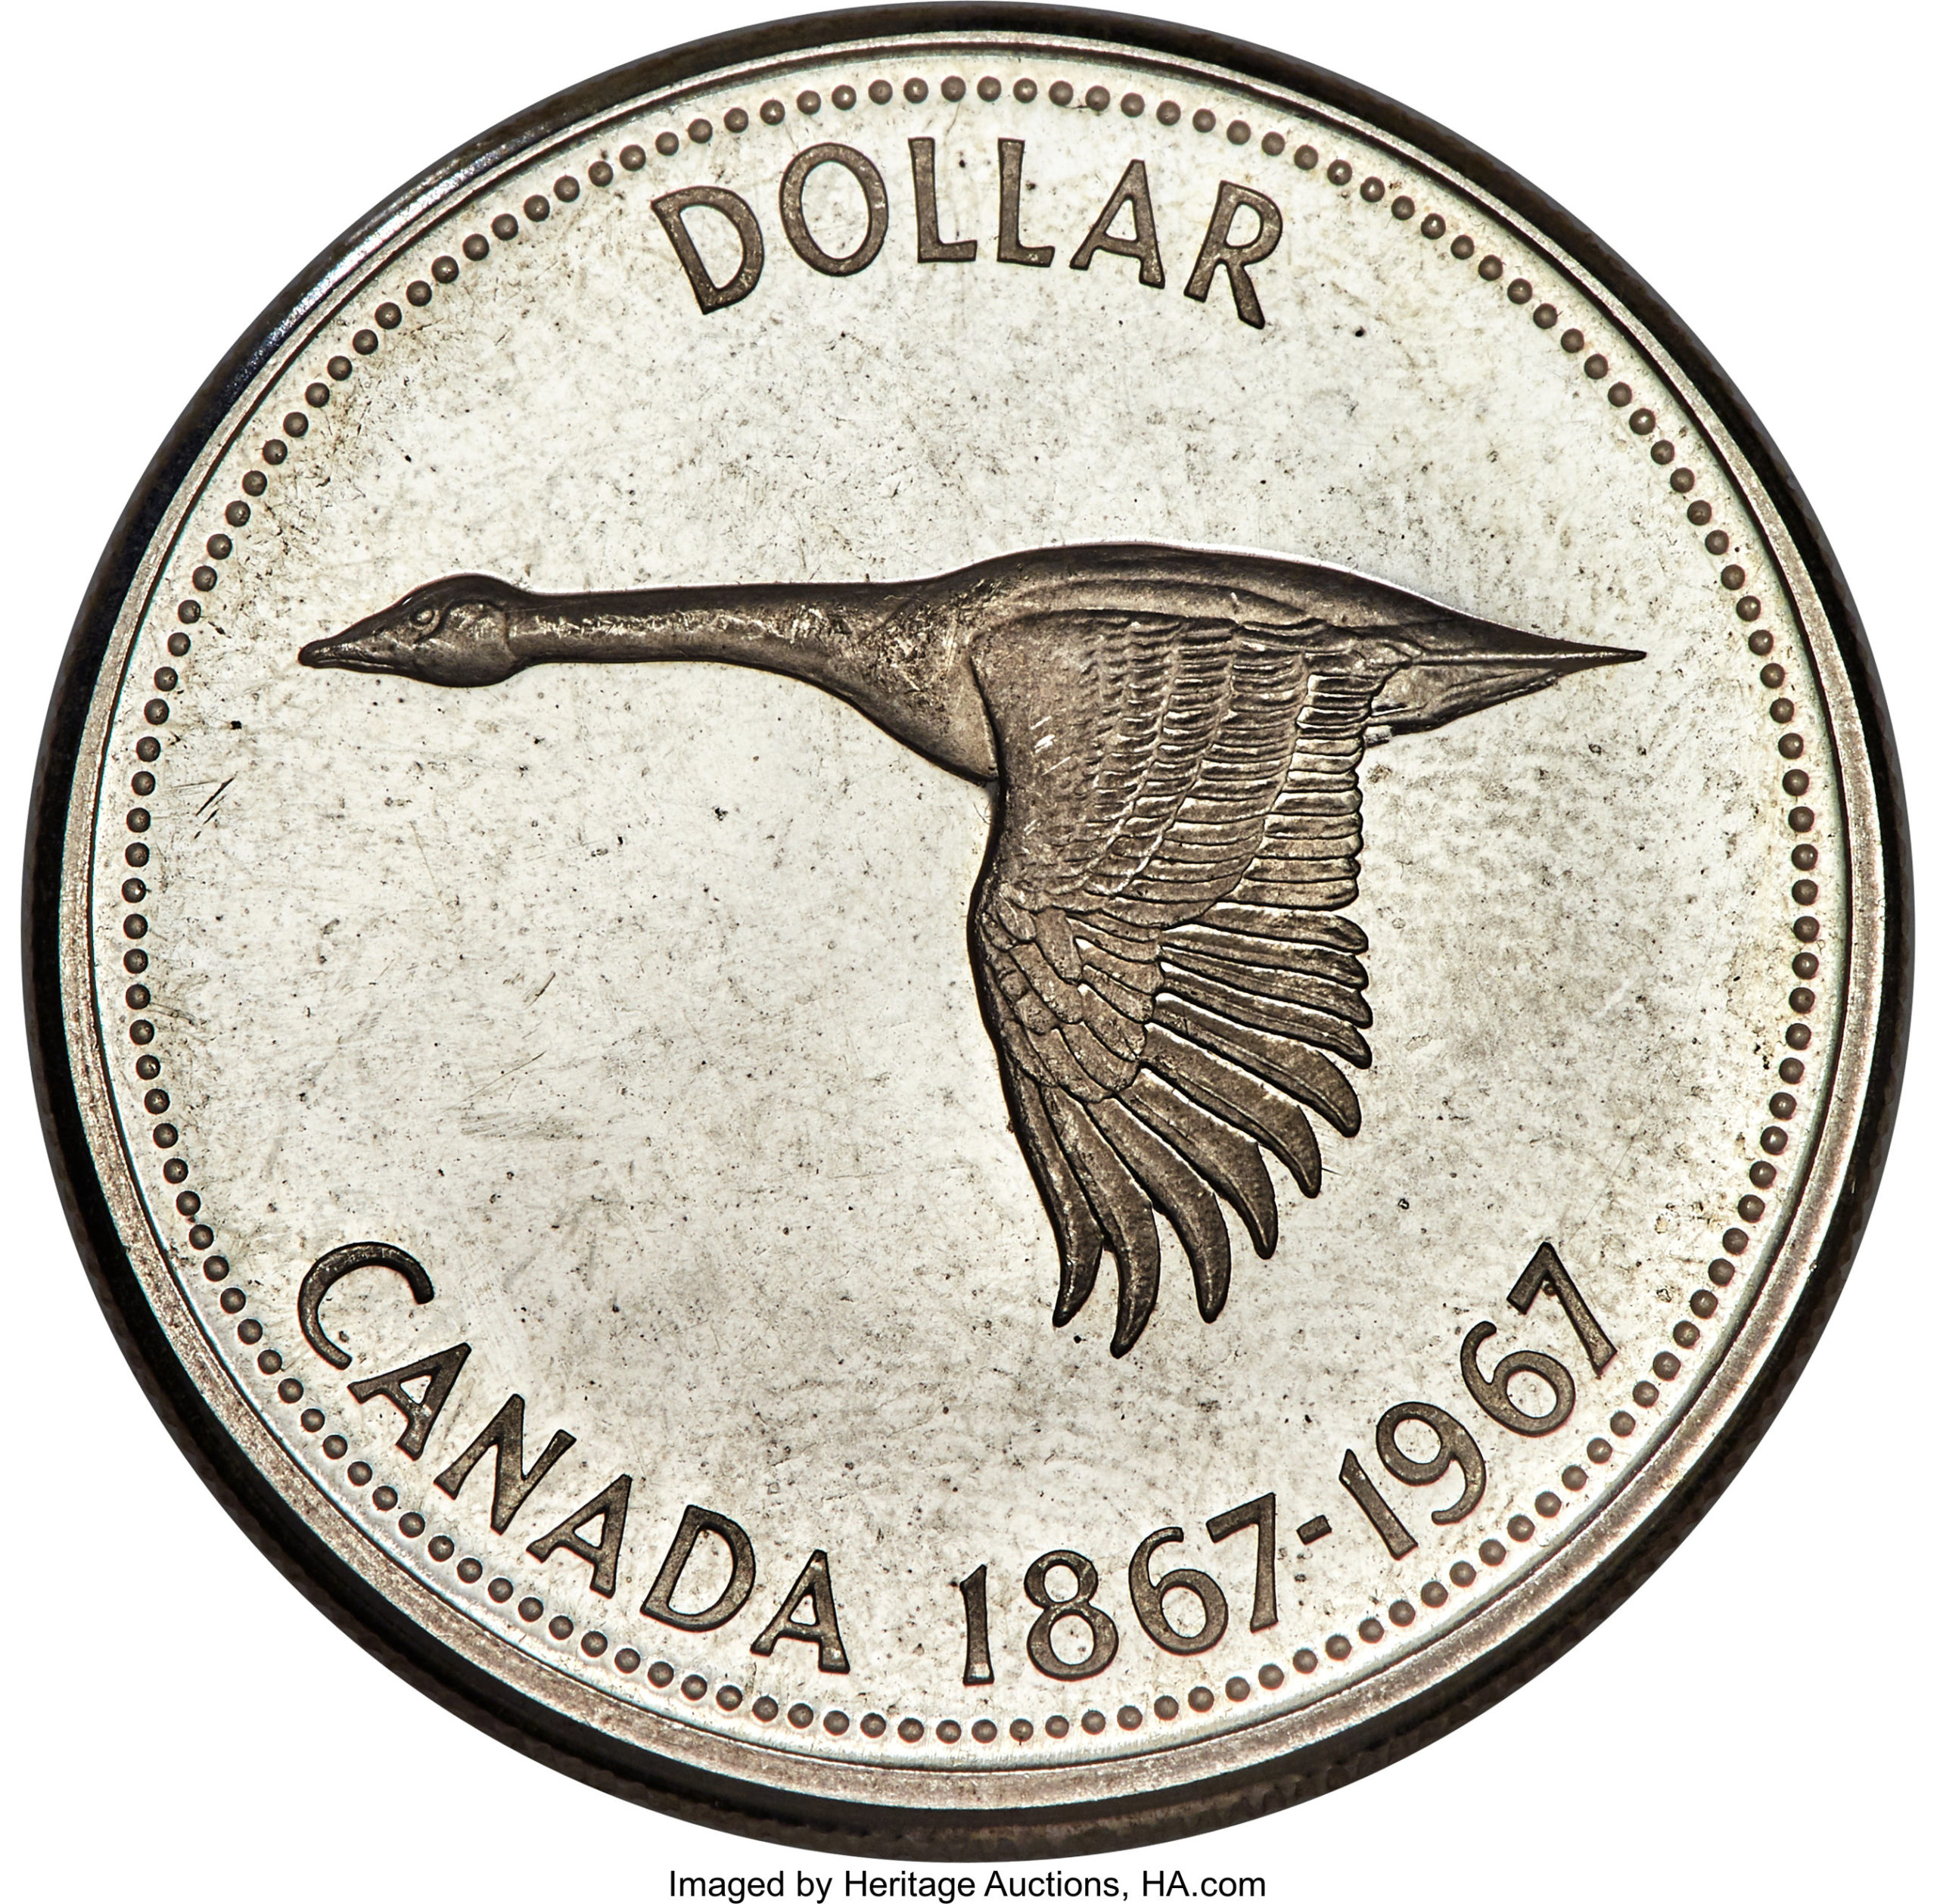 A 1967 Confederation Centennial dollar featuring a Canada goose in flight